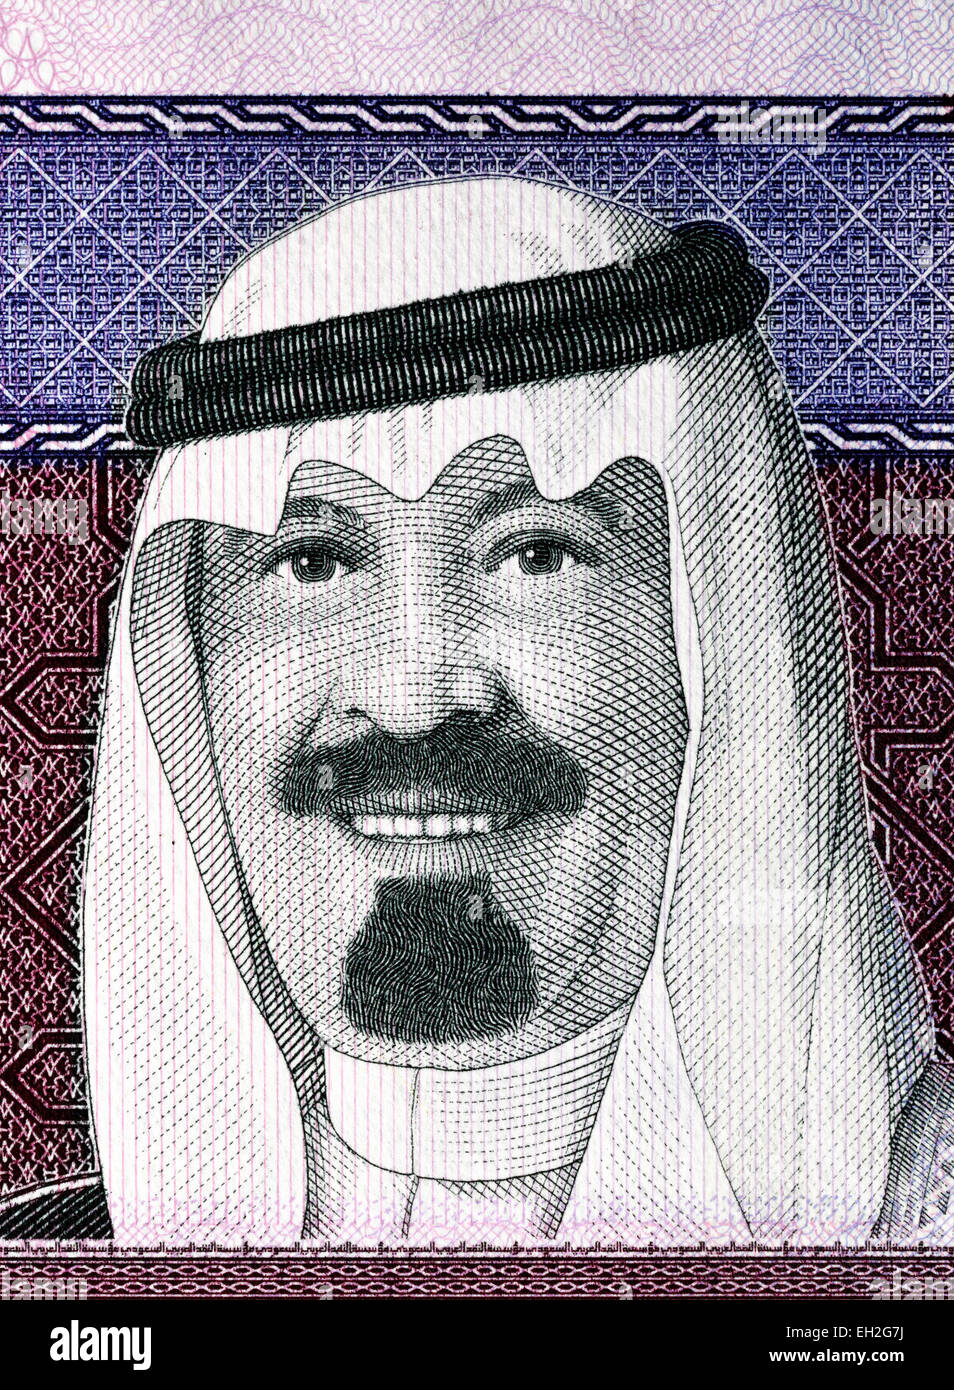 King Abdul Aziz from 5 Riyals banknote, Saudi Arabia, 2009 Stock Photo